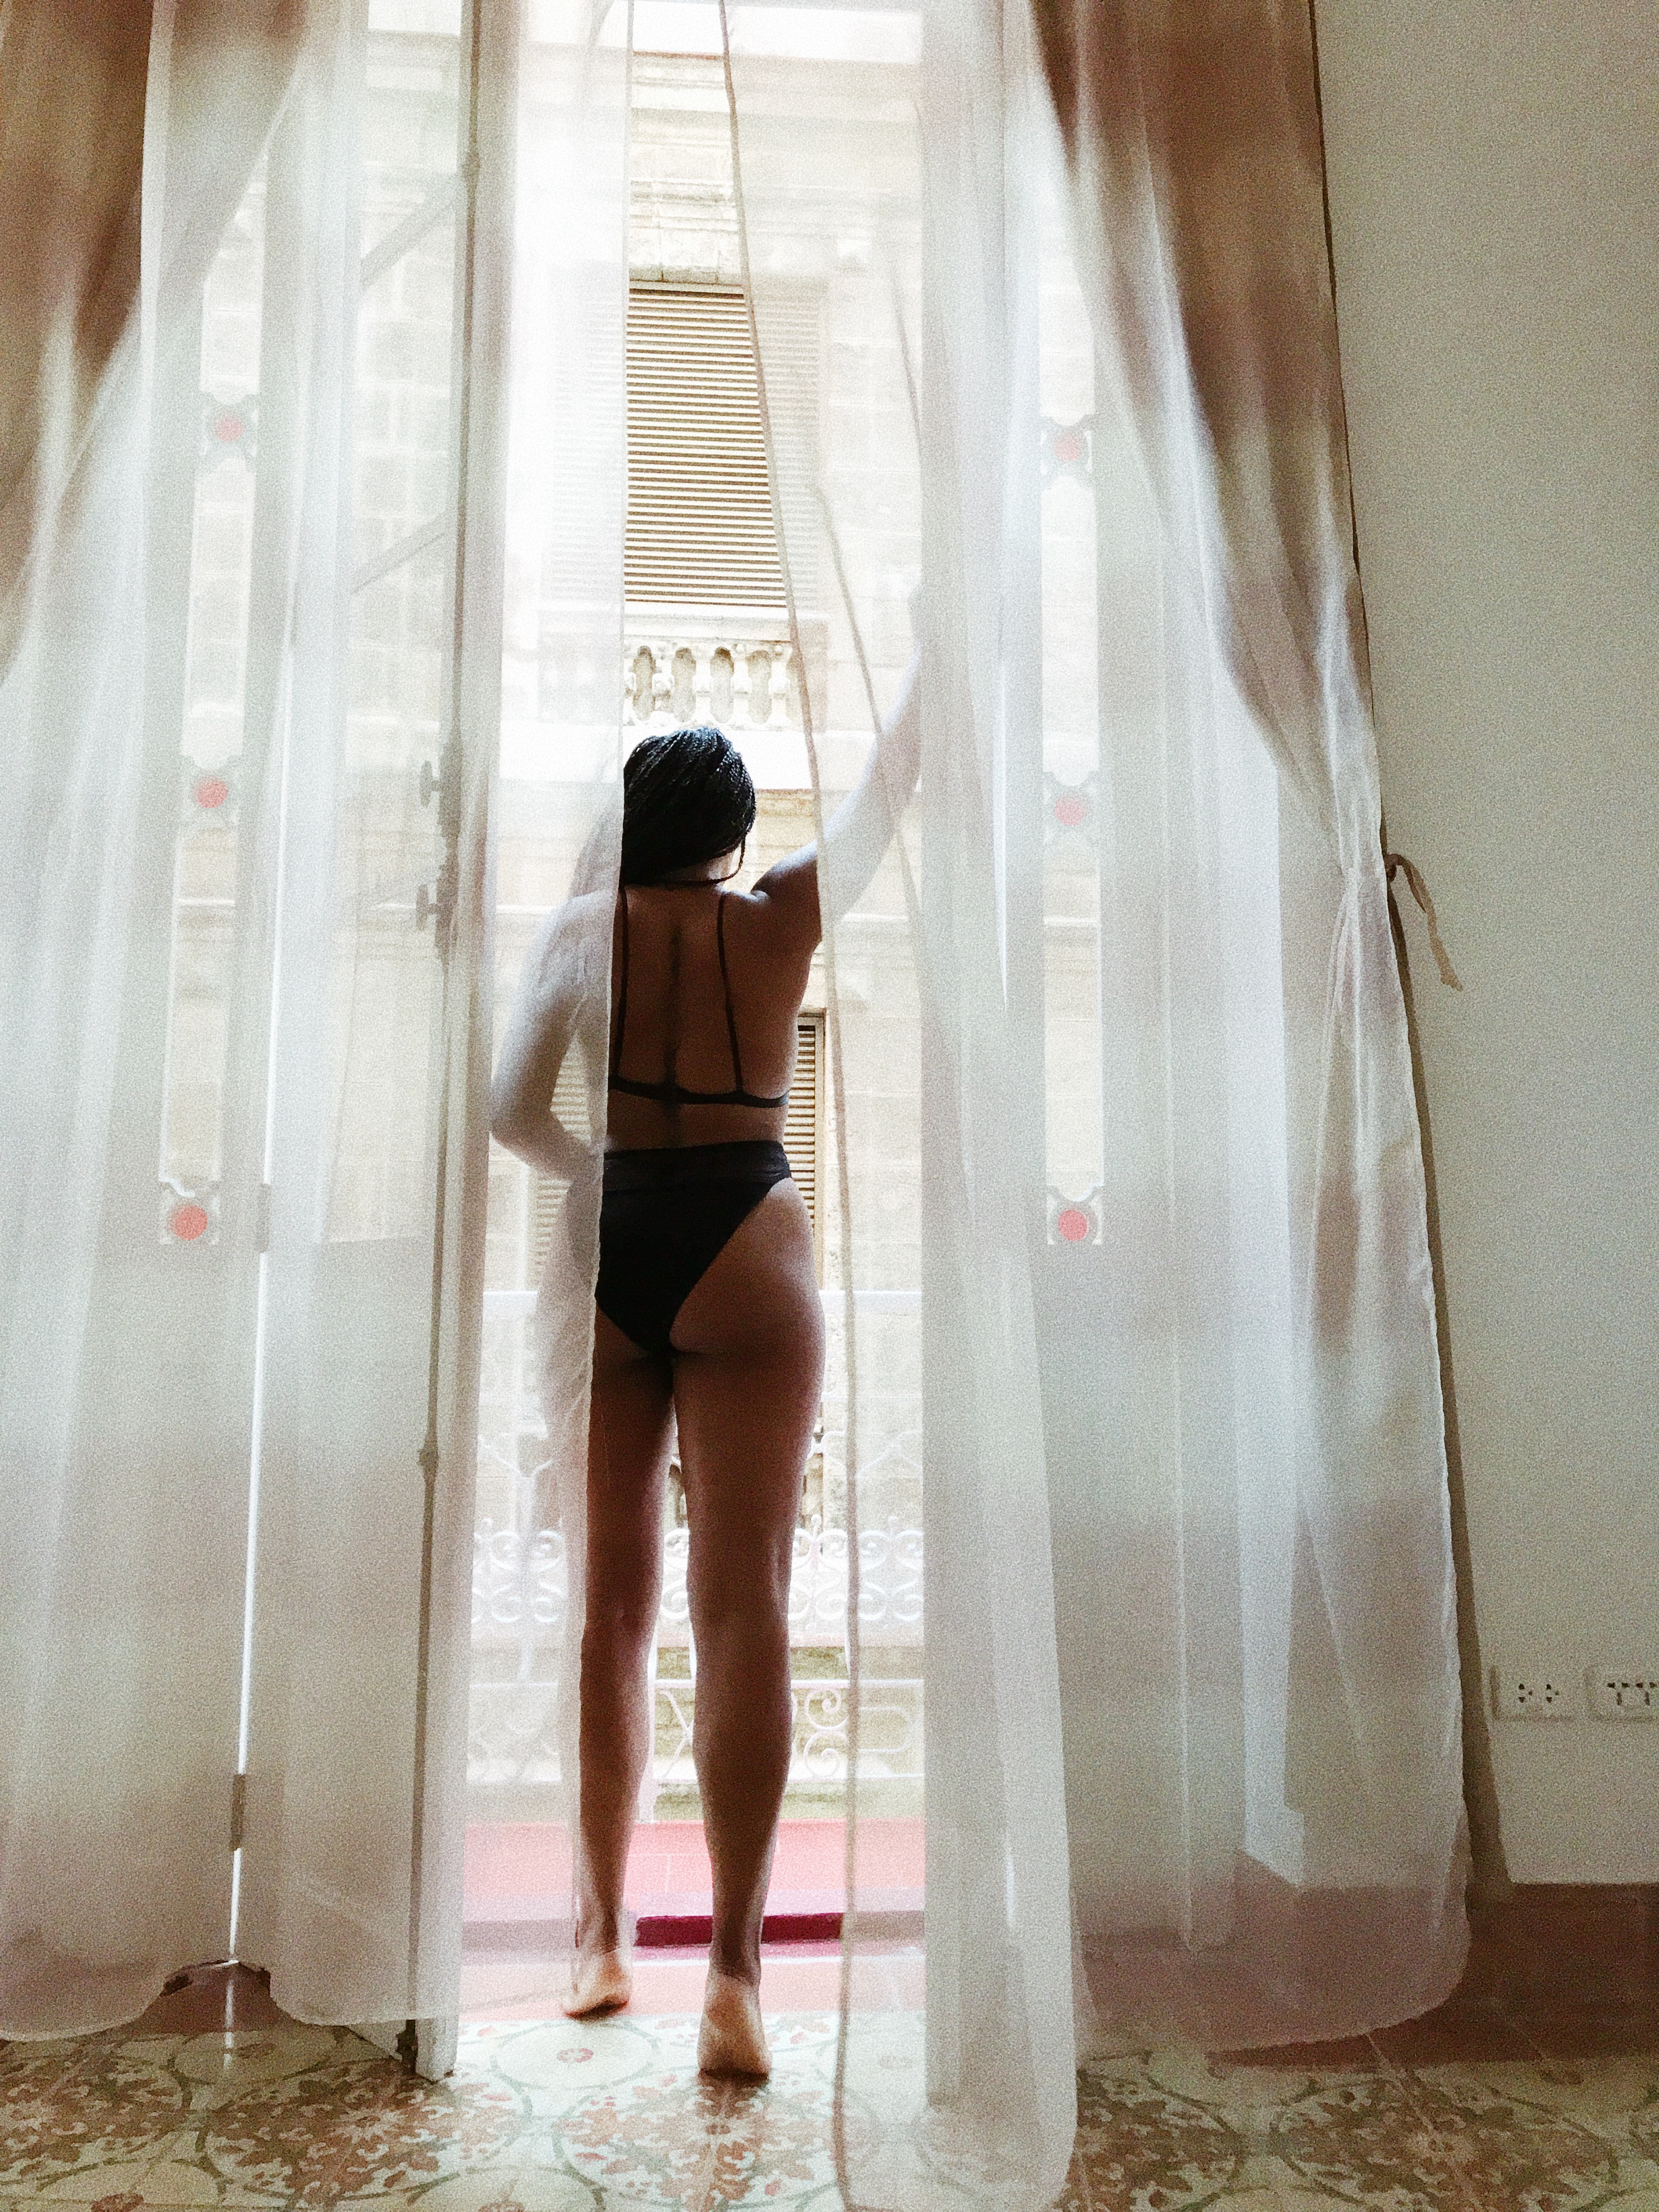 Black girl in Cuba. Period panties sustain review. Havana balcony